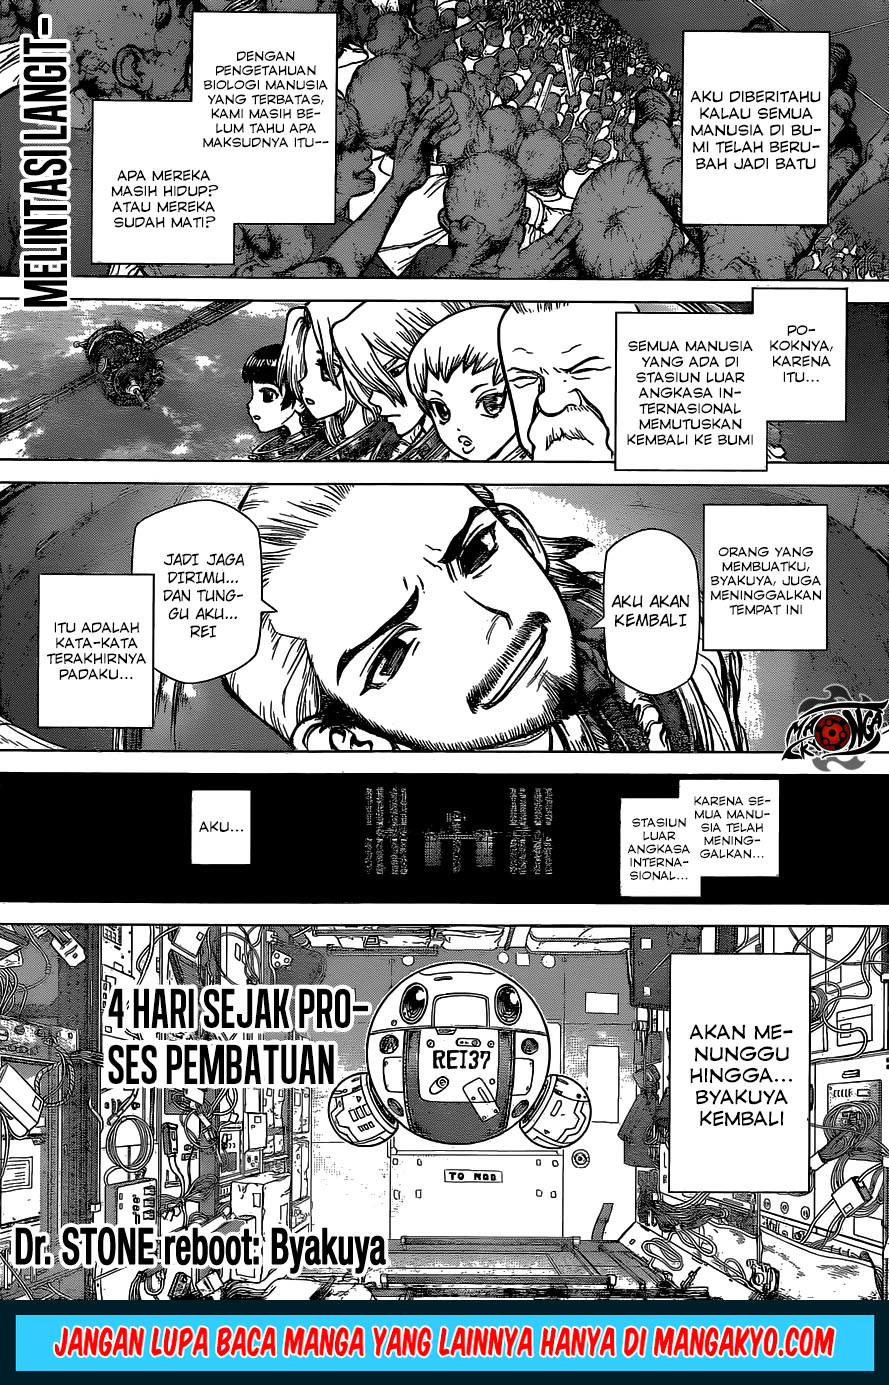 Dr. Stone Reboot: Byakuya: Chapter 5 - Page 1